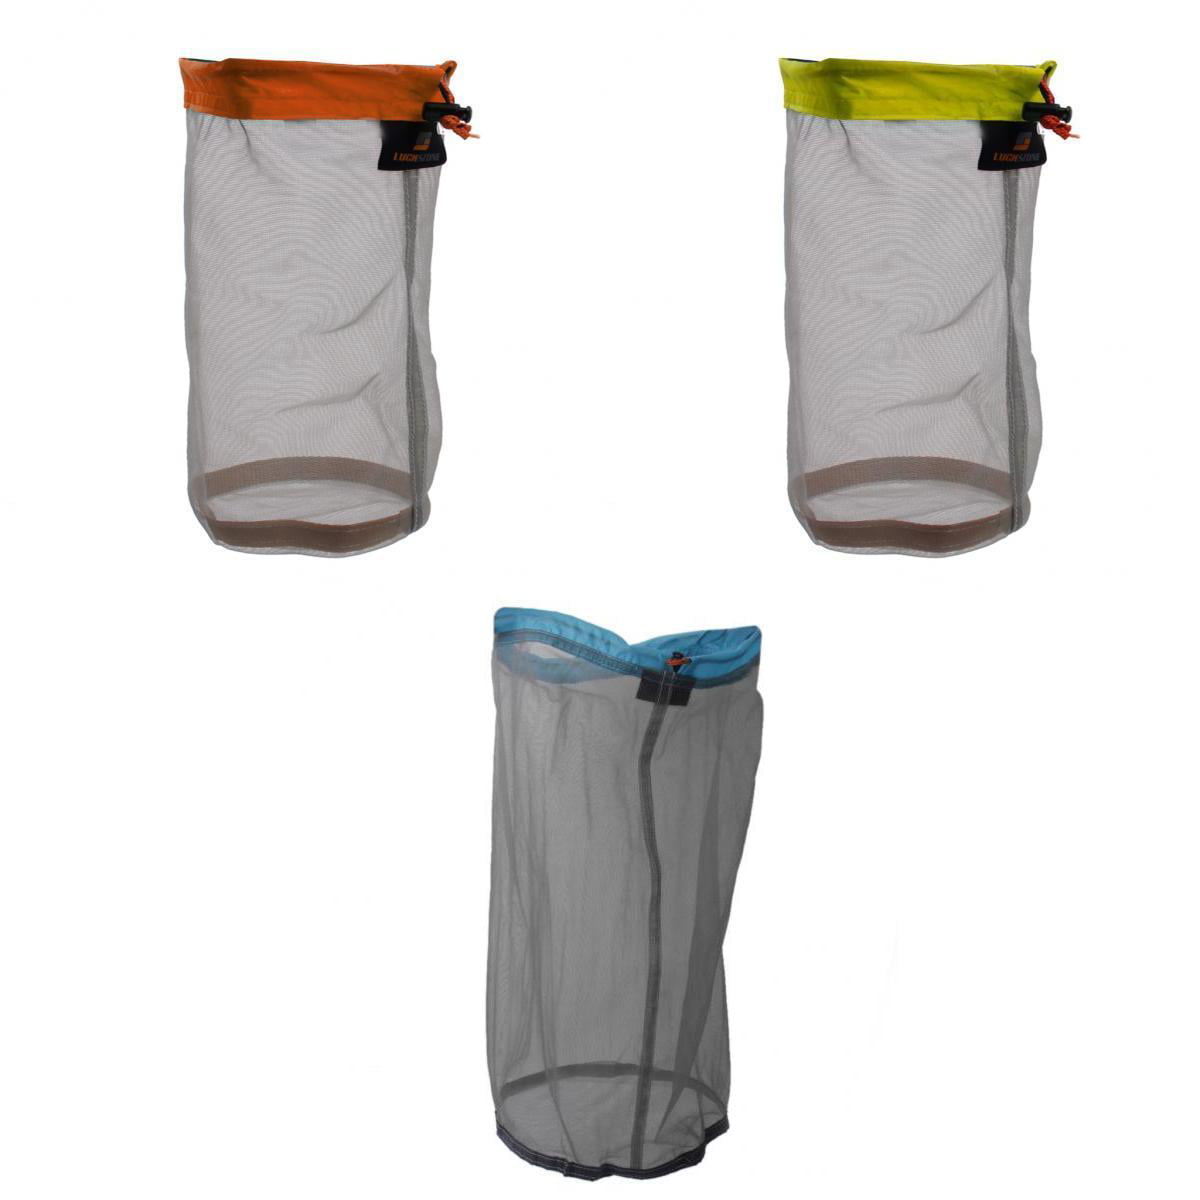 3x Mesh Drawstring Bag Laundry Bag Mesh Stuff Sack for Hiking Outdoor Sports 